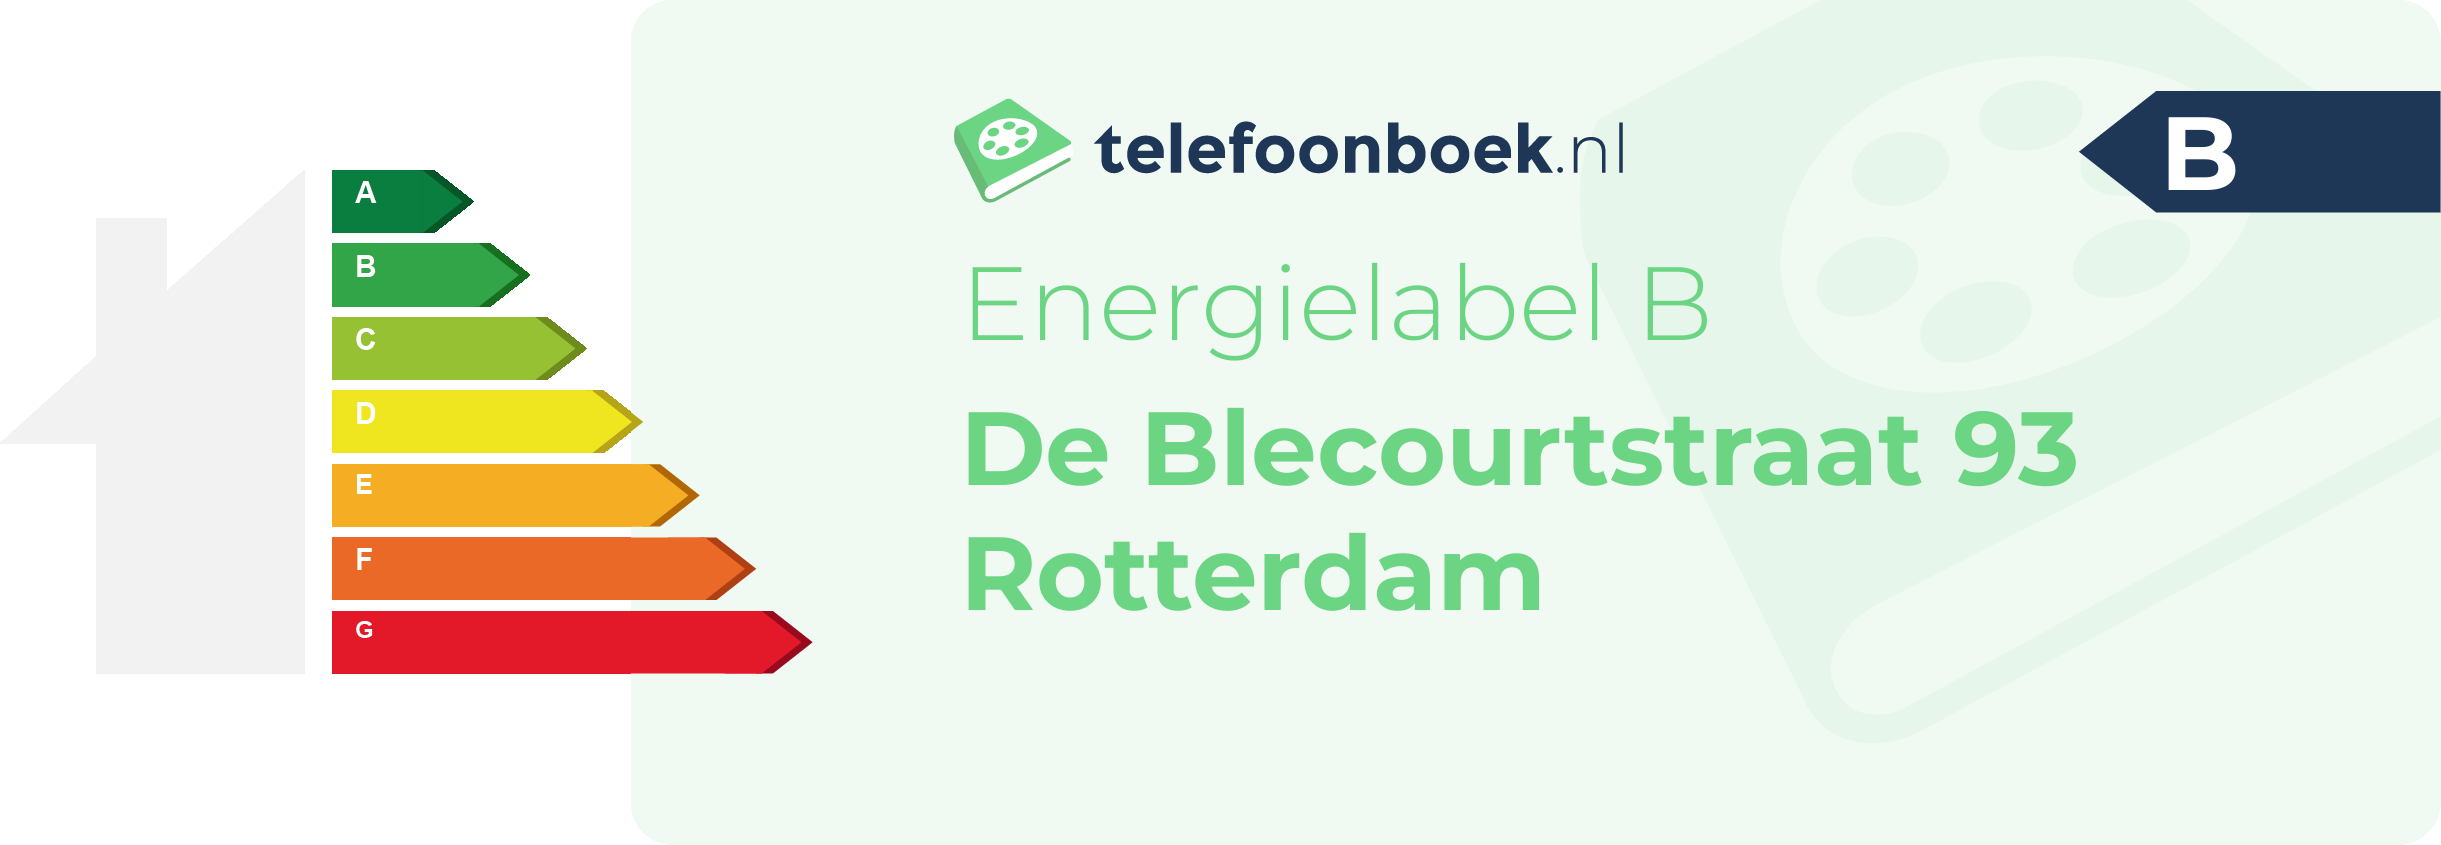 Energielabel De Blecourtstraat 93 Rotterdam